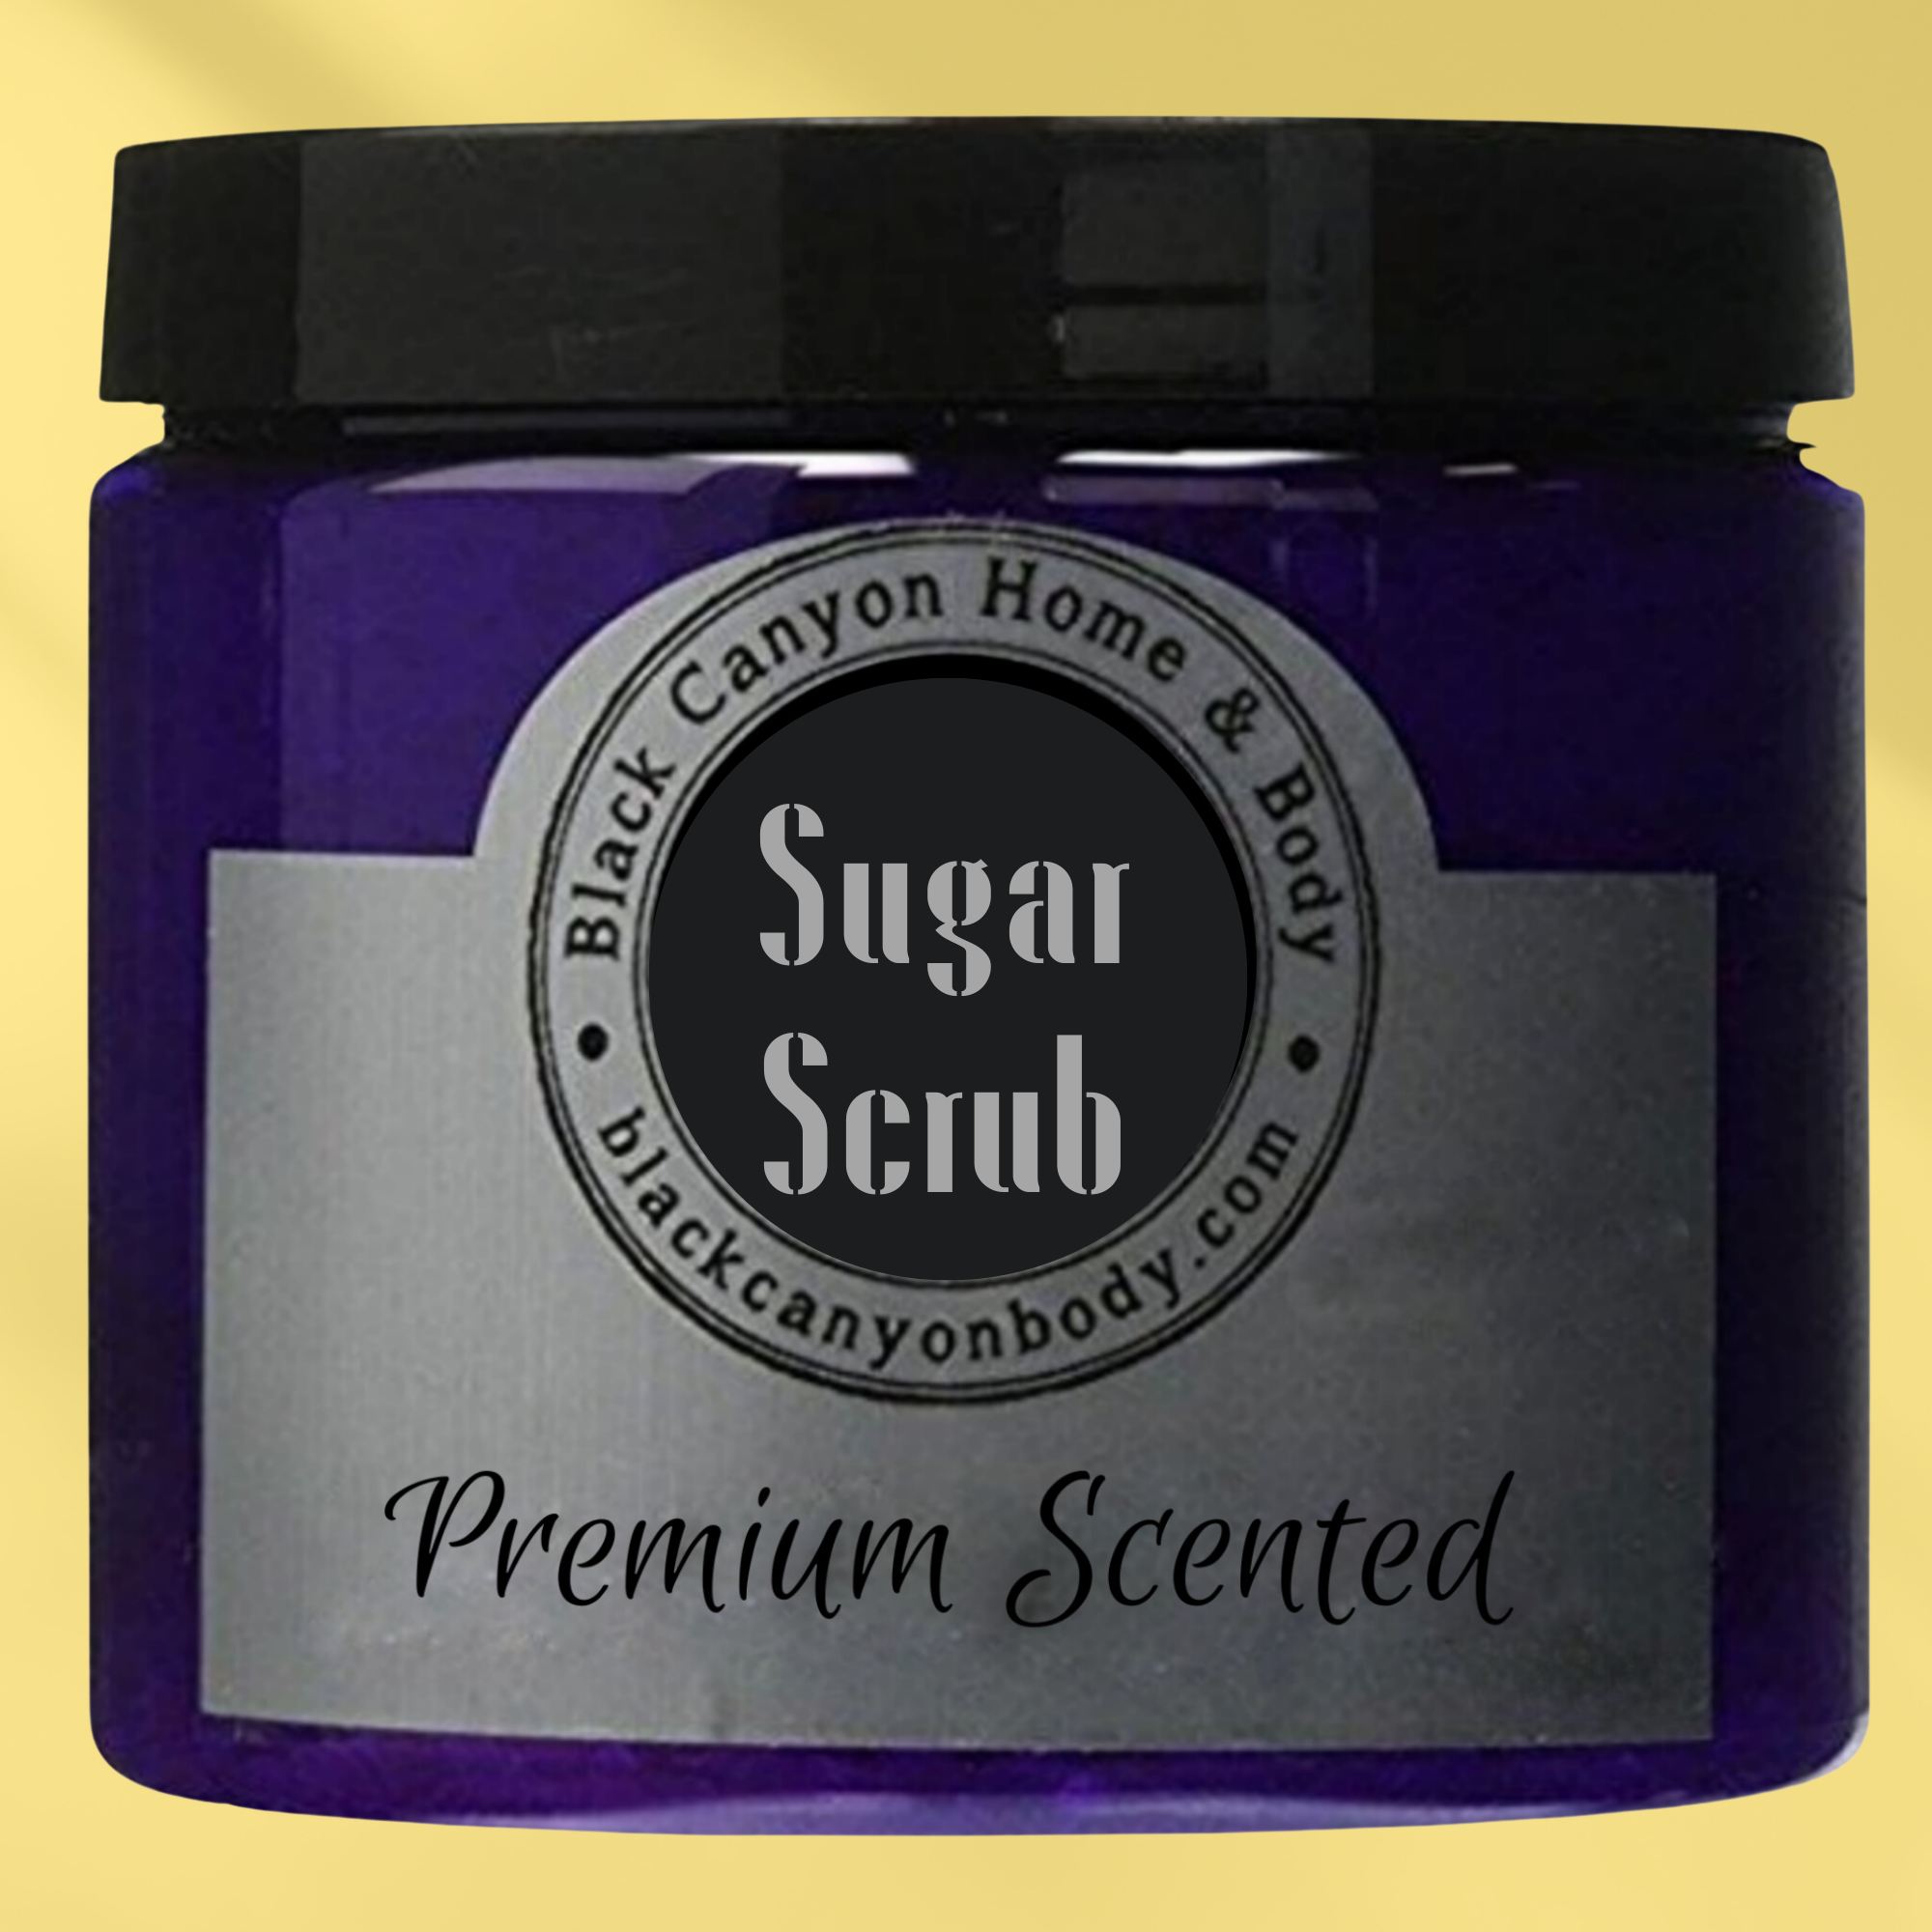 Black Canyon Cashmere Sandalwood & Vanilla Scented Sugar Scrub